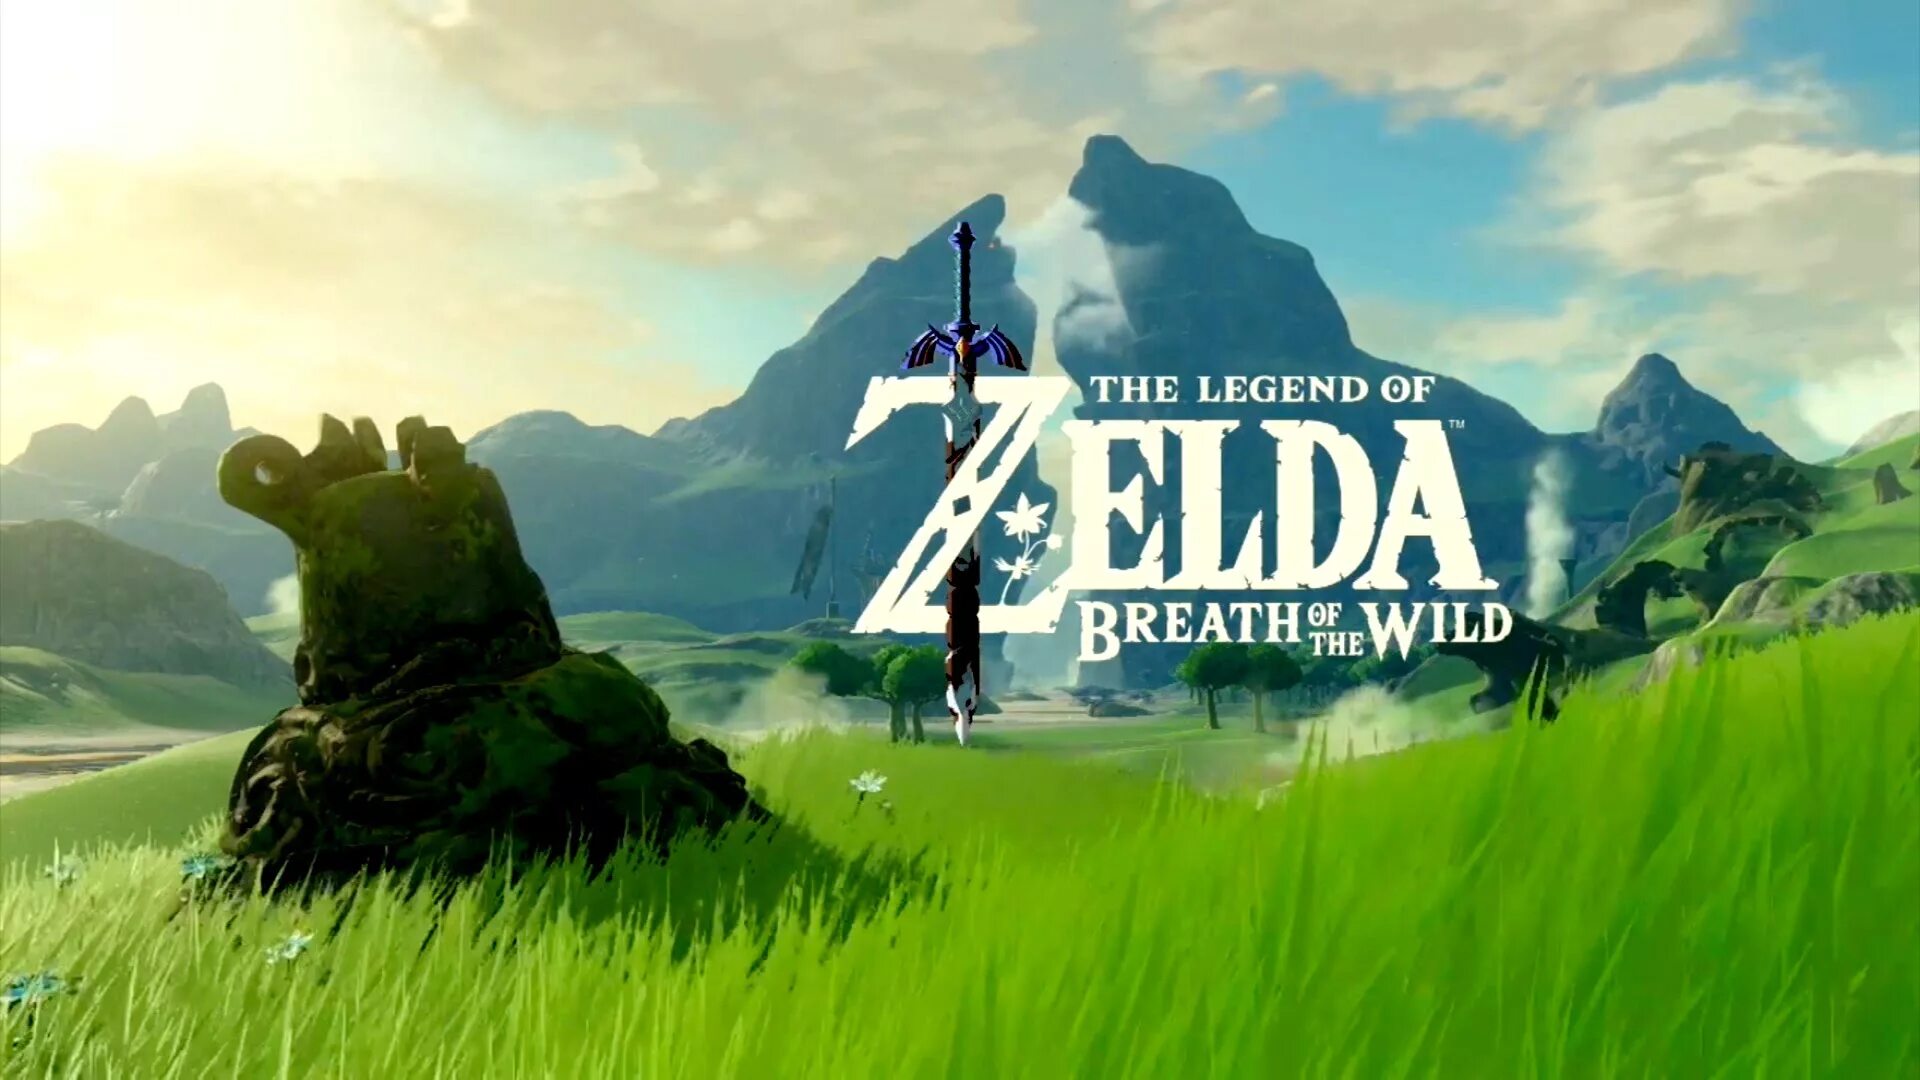 Легенда вилд. The Legend of Zelda: Breath of the Wild. Легенда о Зельде Breath of the Wild. The Legend of Zelda: Breath of the Wild (2017). Легенда о Зельде дыхание дикой природы.